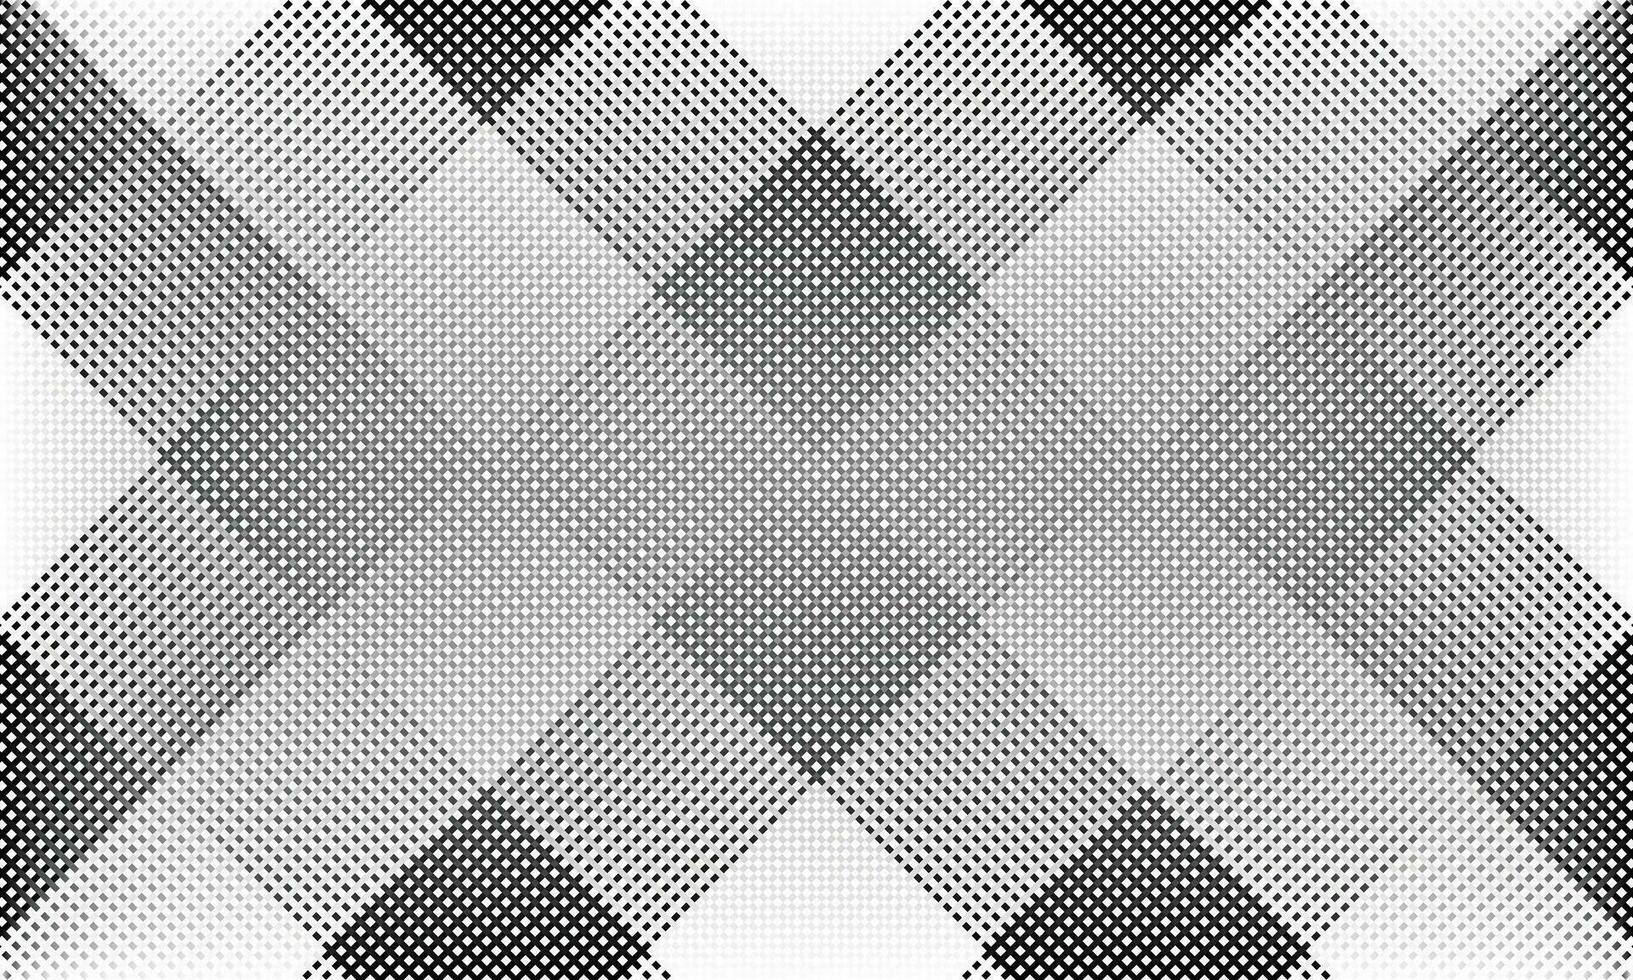 abstract geometric pattern vector art.